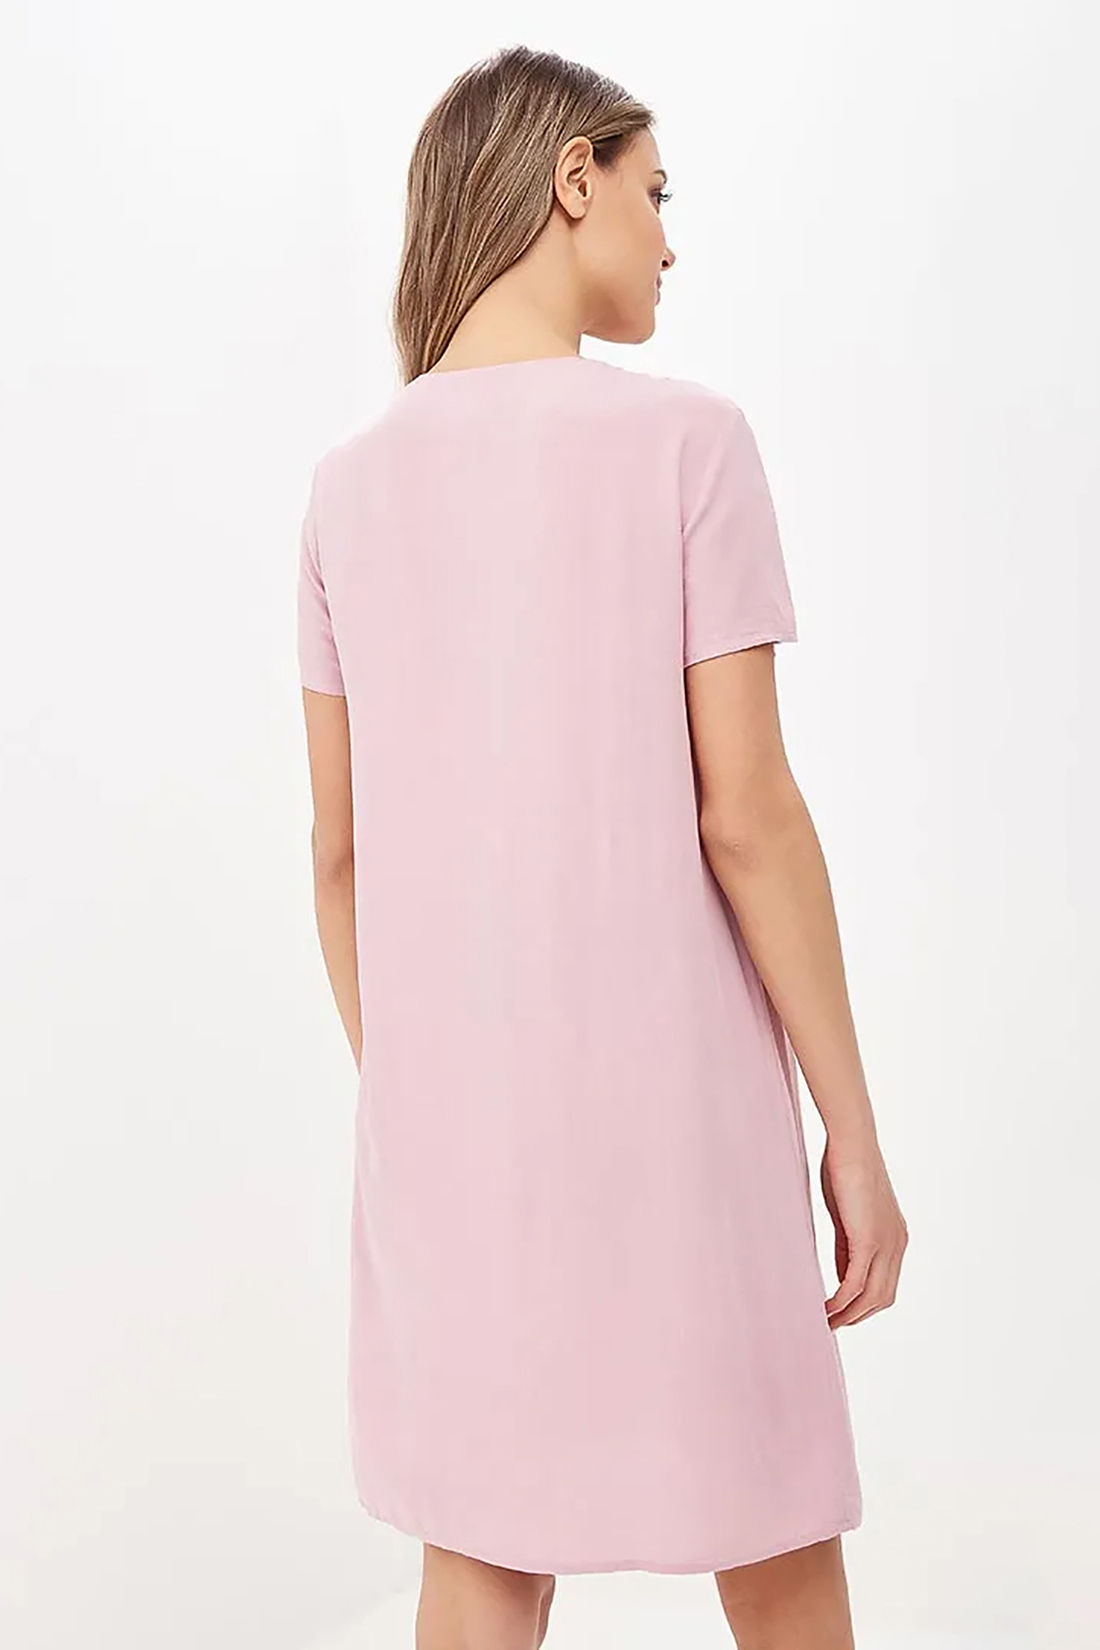 Платье со шнуровкой (арт. baon B459035), размер XS, цвет розовый Платье со шнуровкой (арт. baon B459035) - фото 2